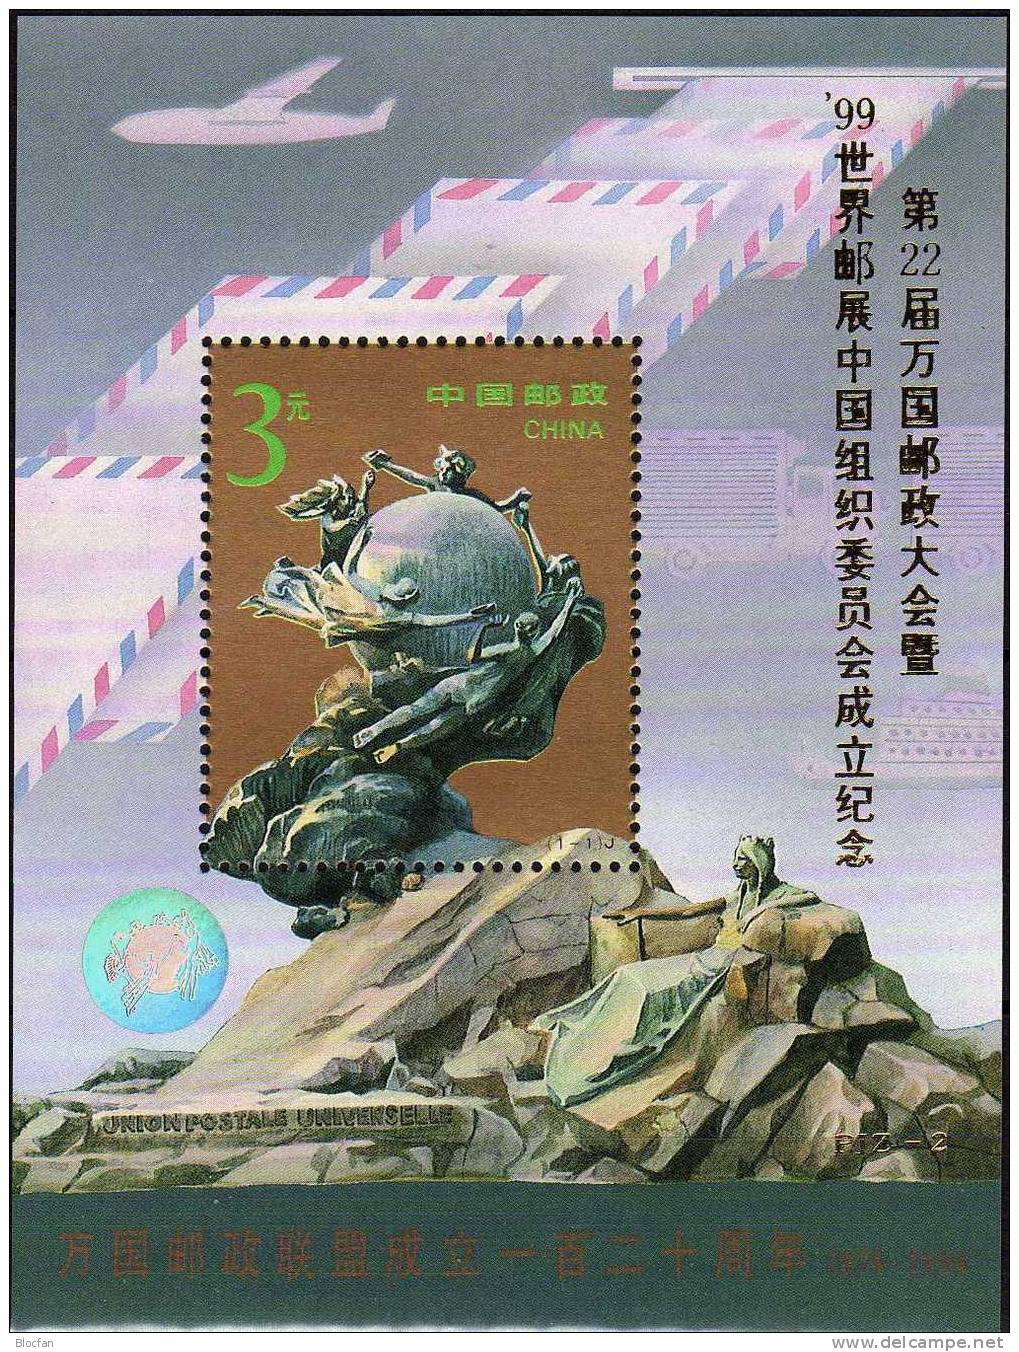 Exposition 1999 Airplane and letter China 2564+Block 67 I No. ** 24€ Hologramm UPU emblem overprint gold Code PJZ-2 CINA